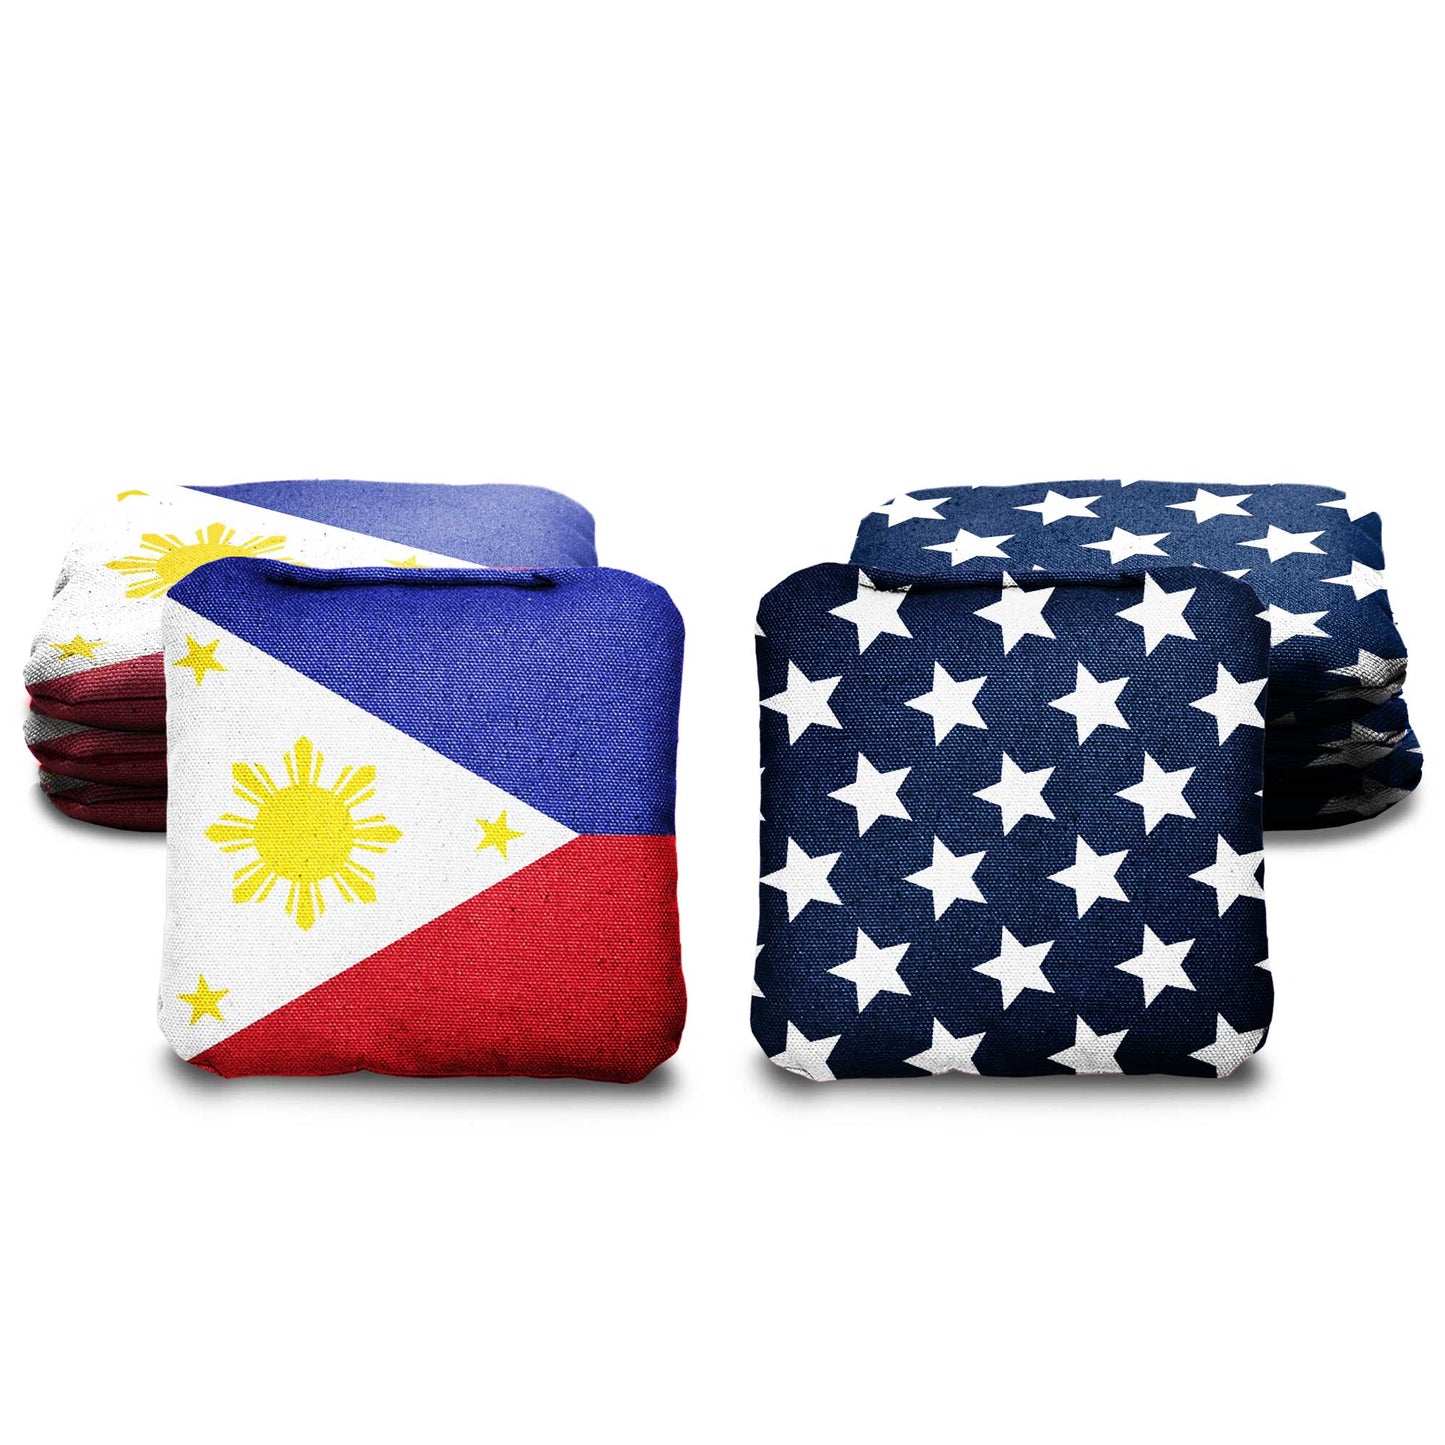 The Filipinos and Mericas - 8 Cornhole Bags